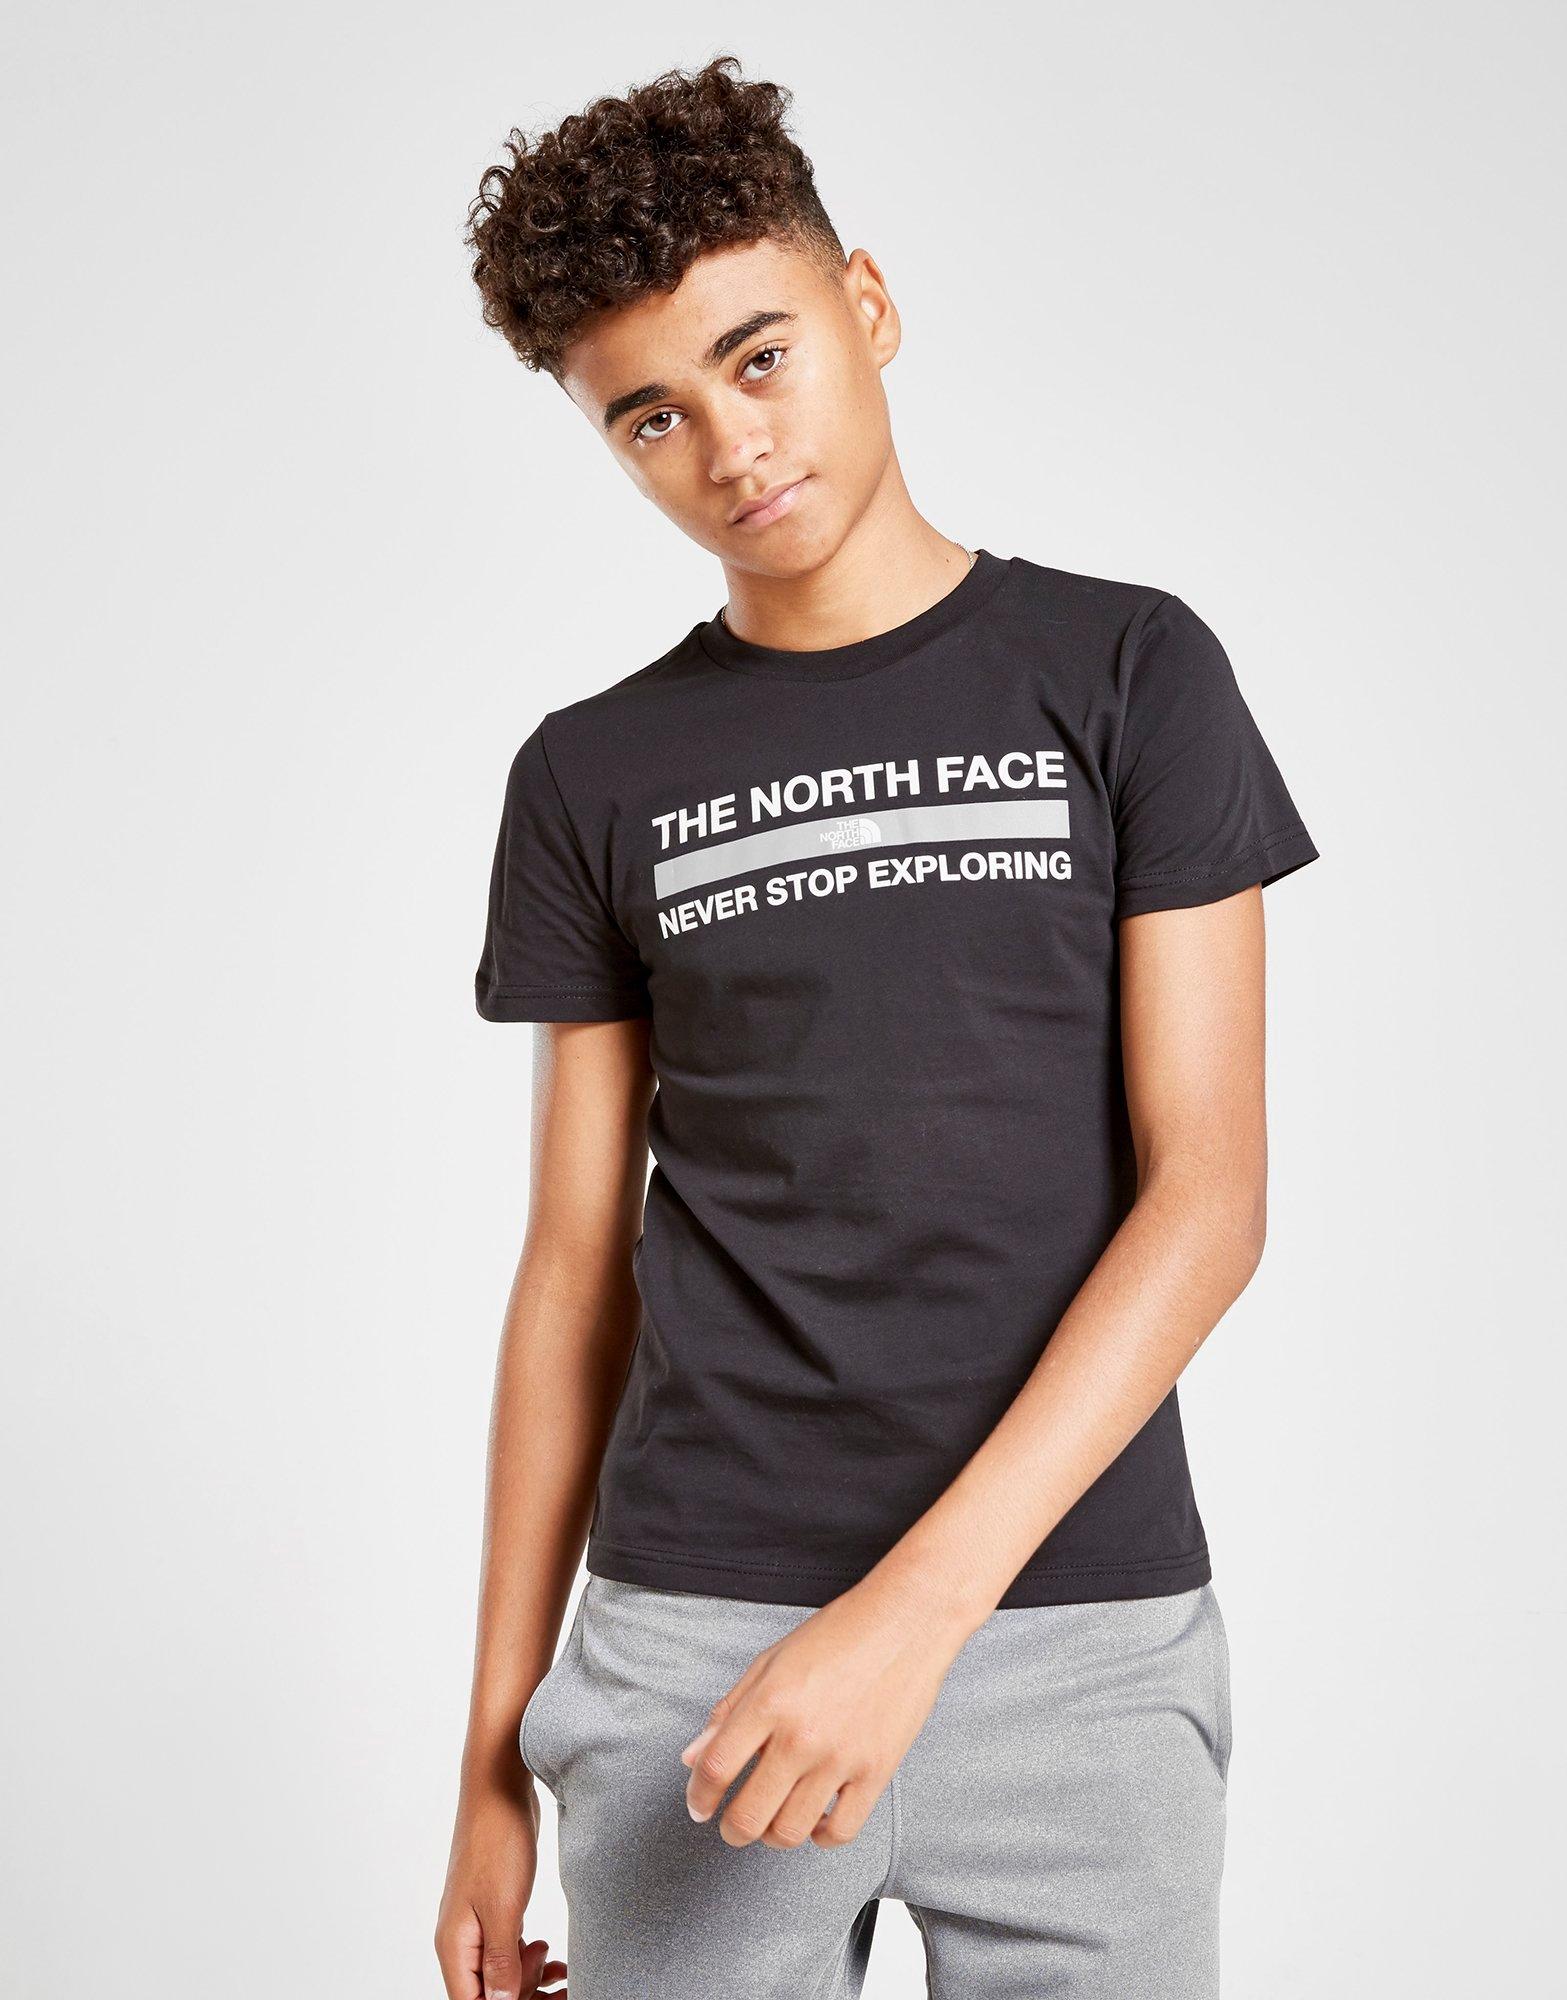 north face never stop exploring t shirt black